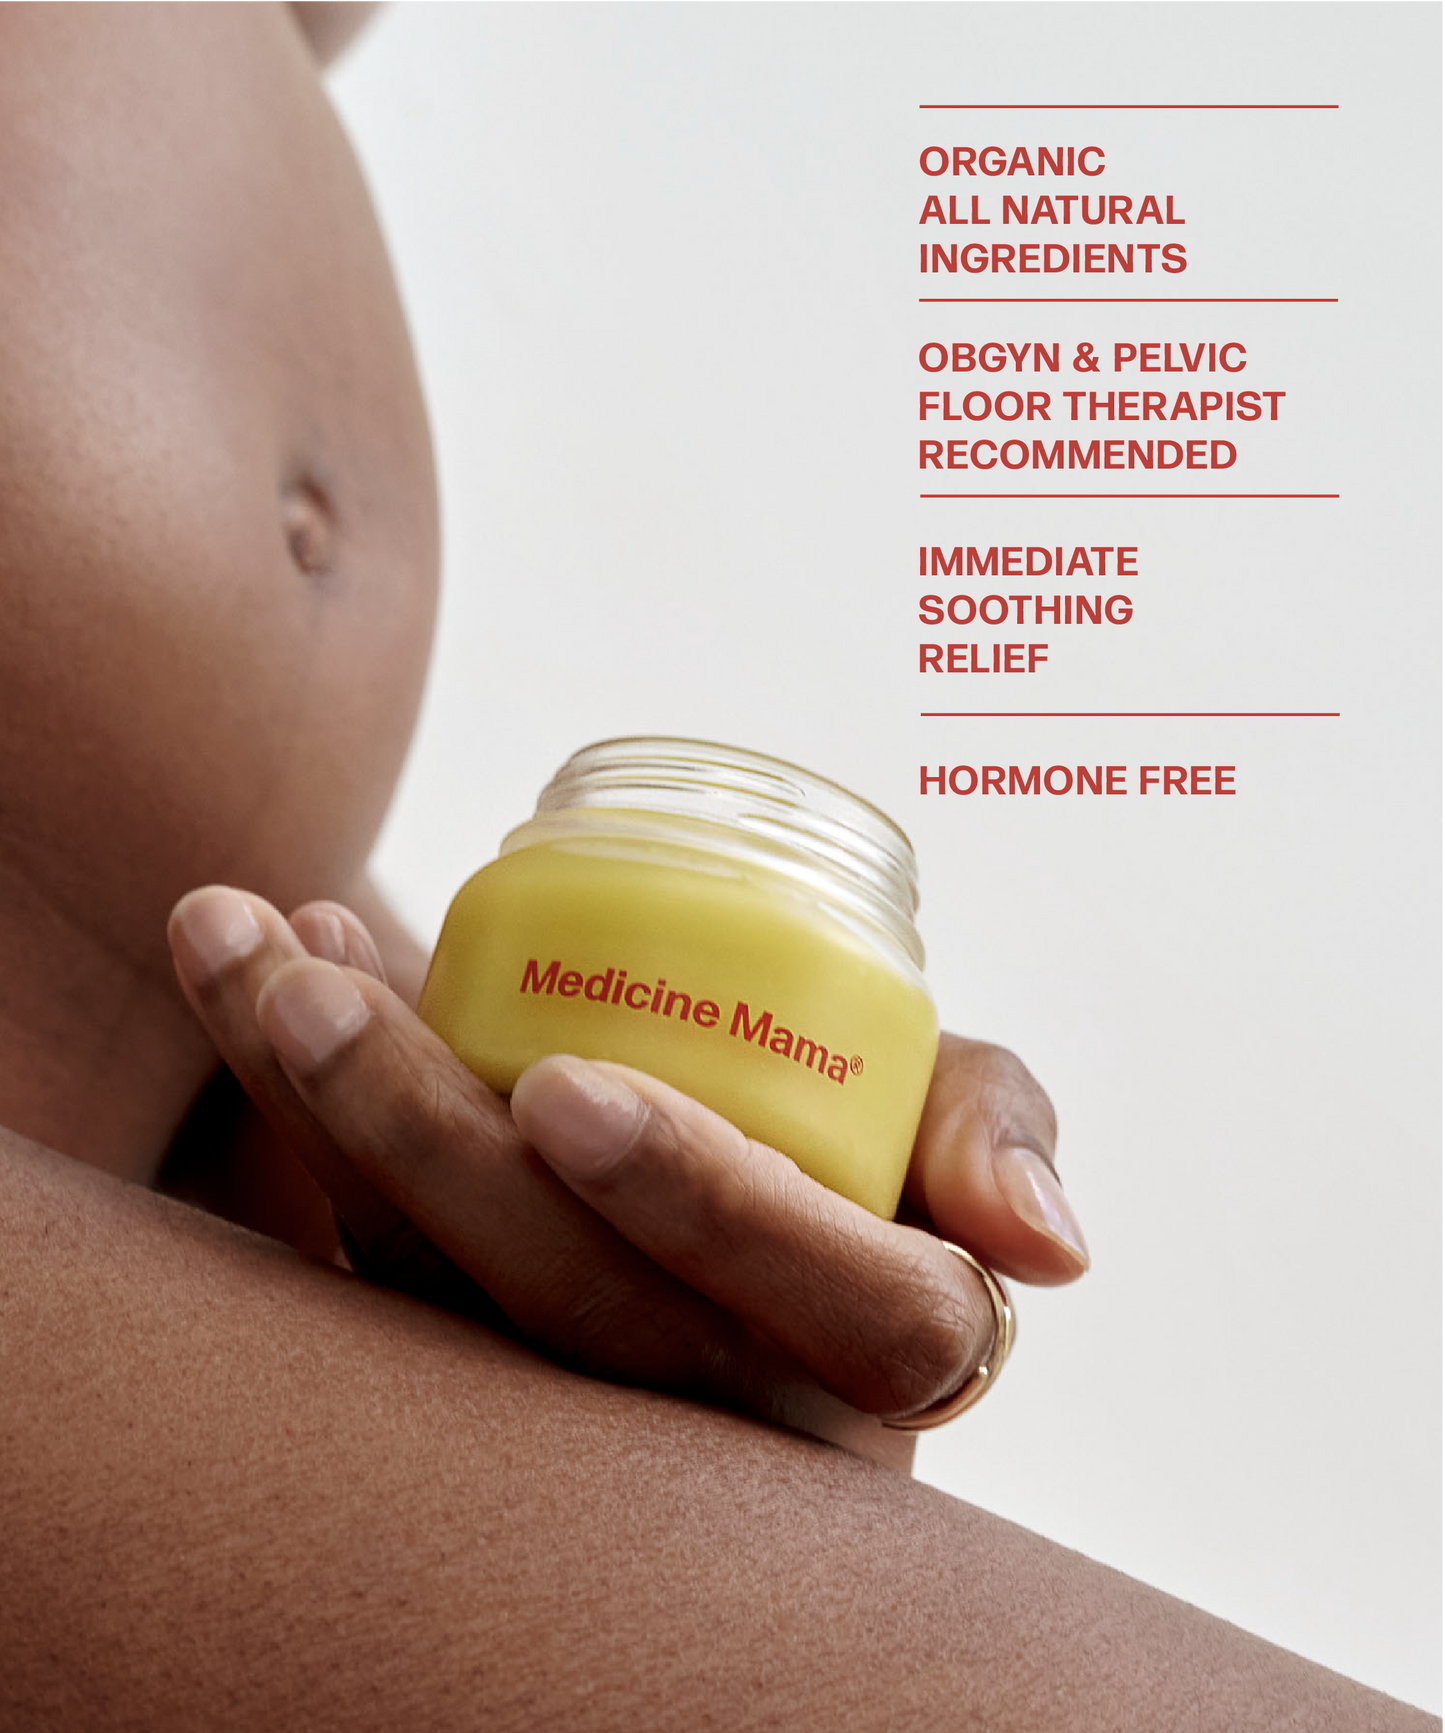 A pregnant woman holding an organic jar of Medicine Mama's VMAGIC® Vulva Balm moisturizer.